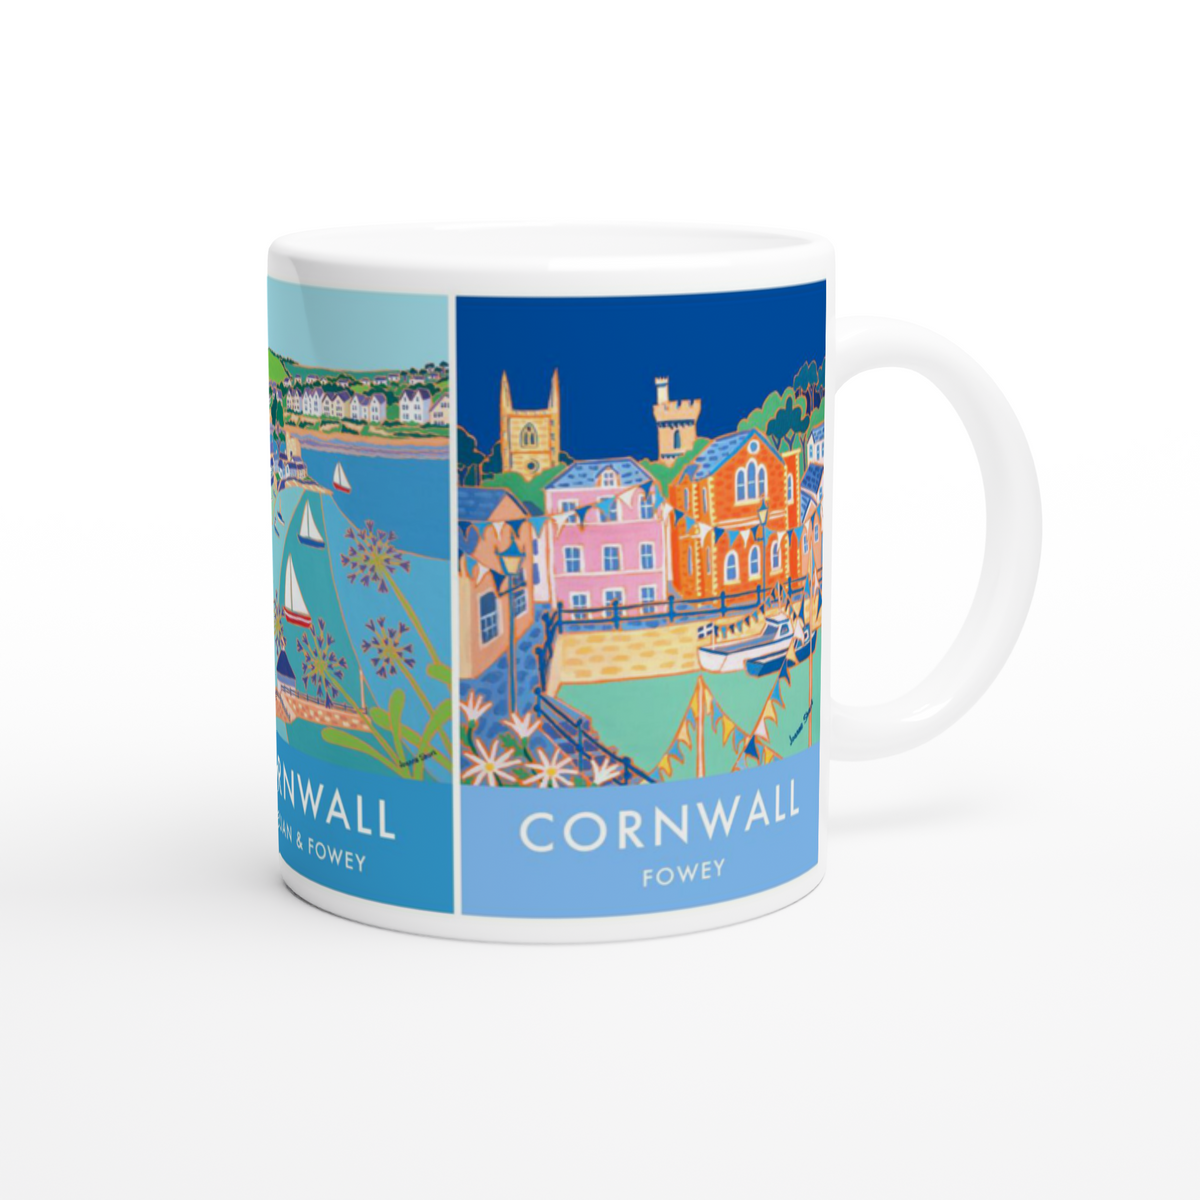 Joanne Short Ceramic Cornish Art Mug featuring Fowey, Polruan and the River Fowey in Cornwall.